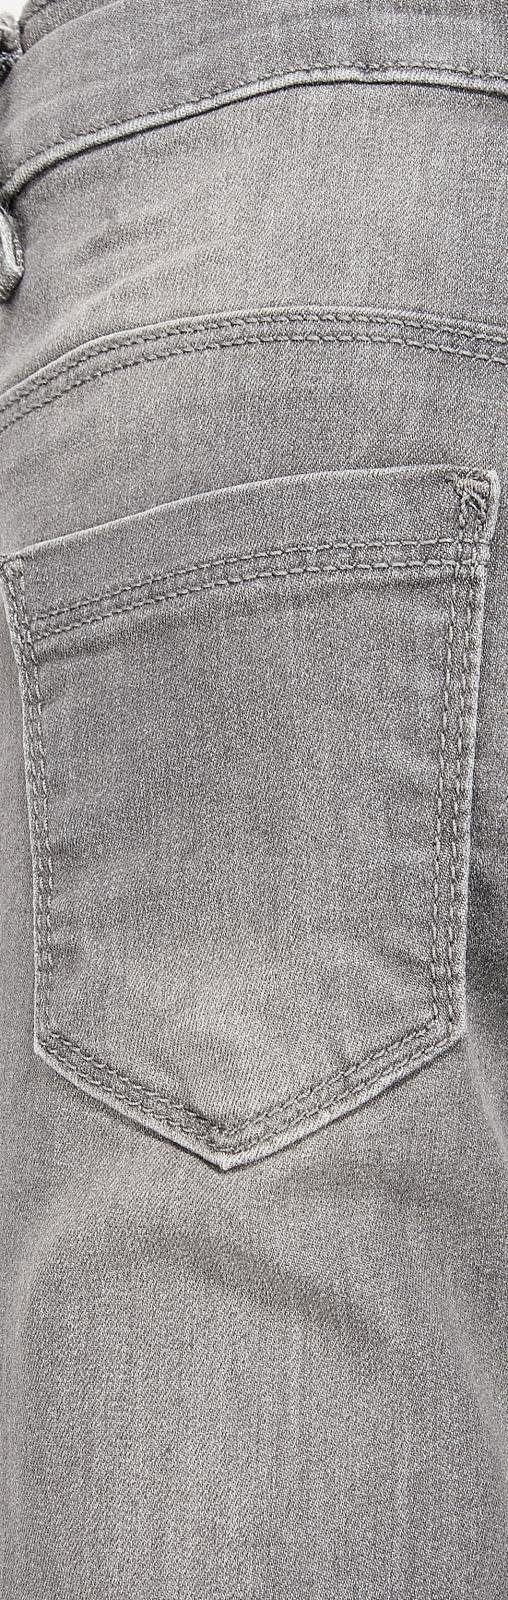 Bundweite BLUE Slim-fit-Jeans Jeggings extra slim denim EFFECT grey schmal